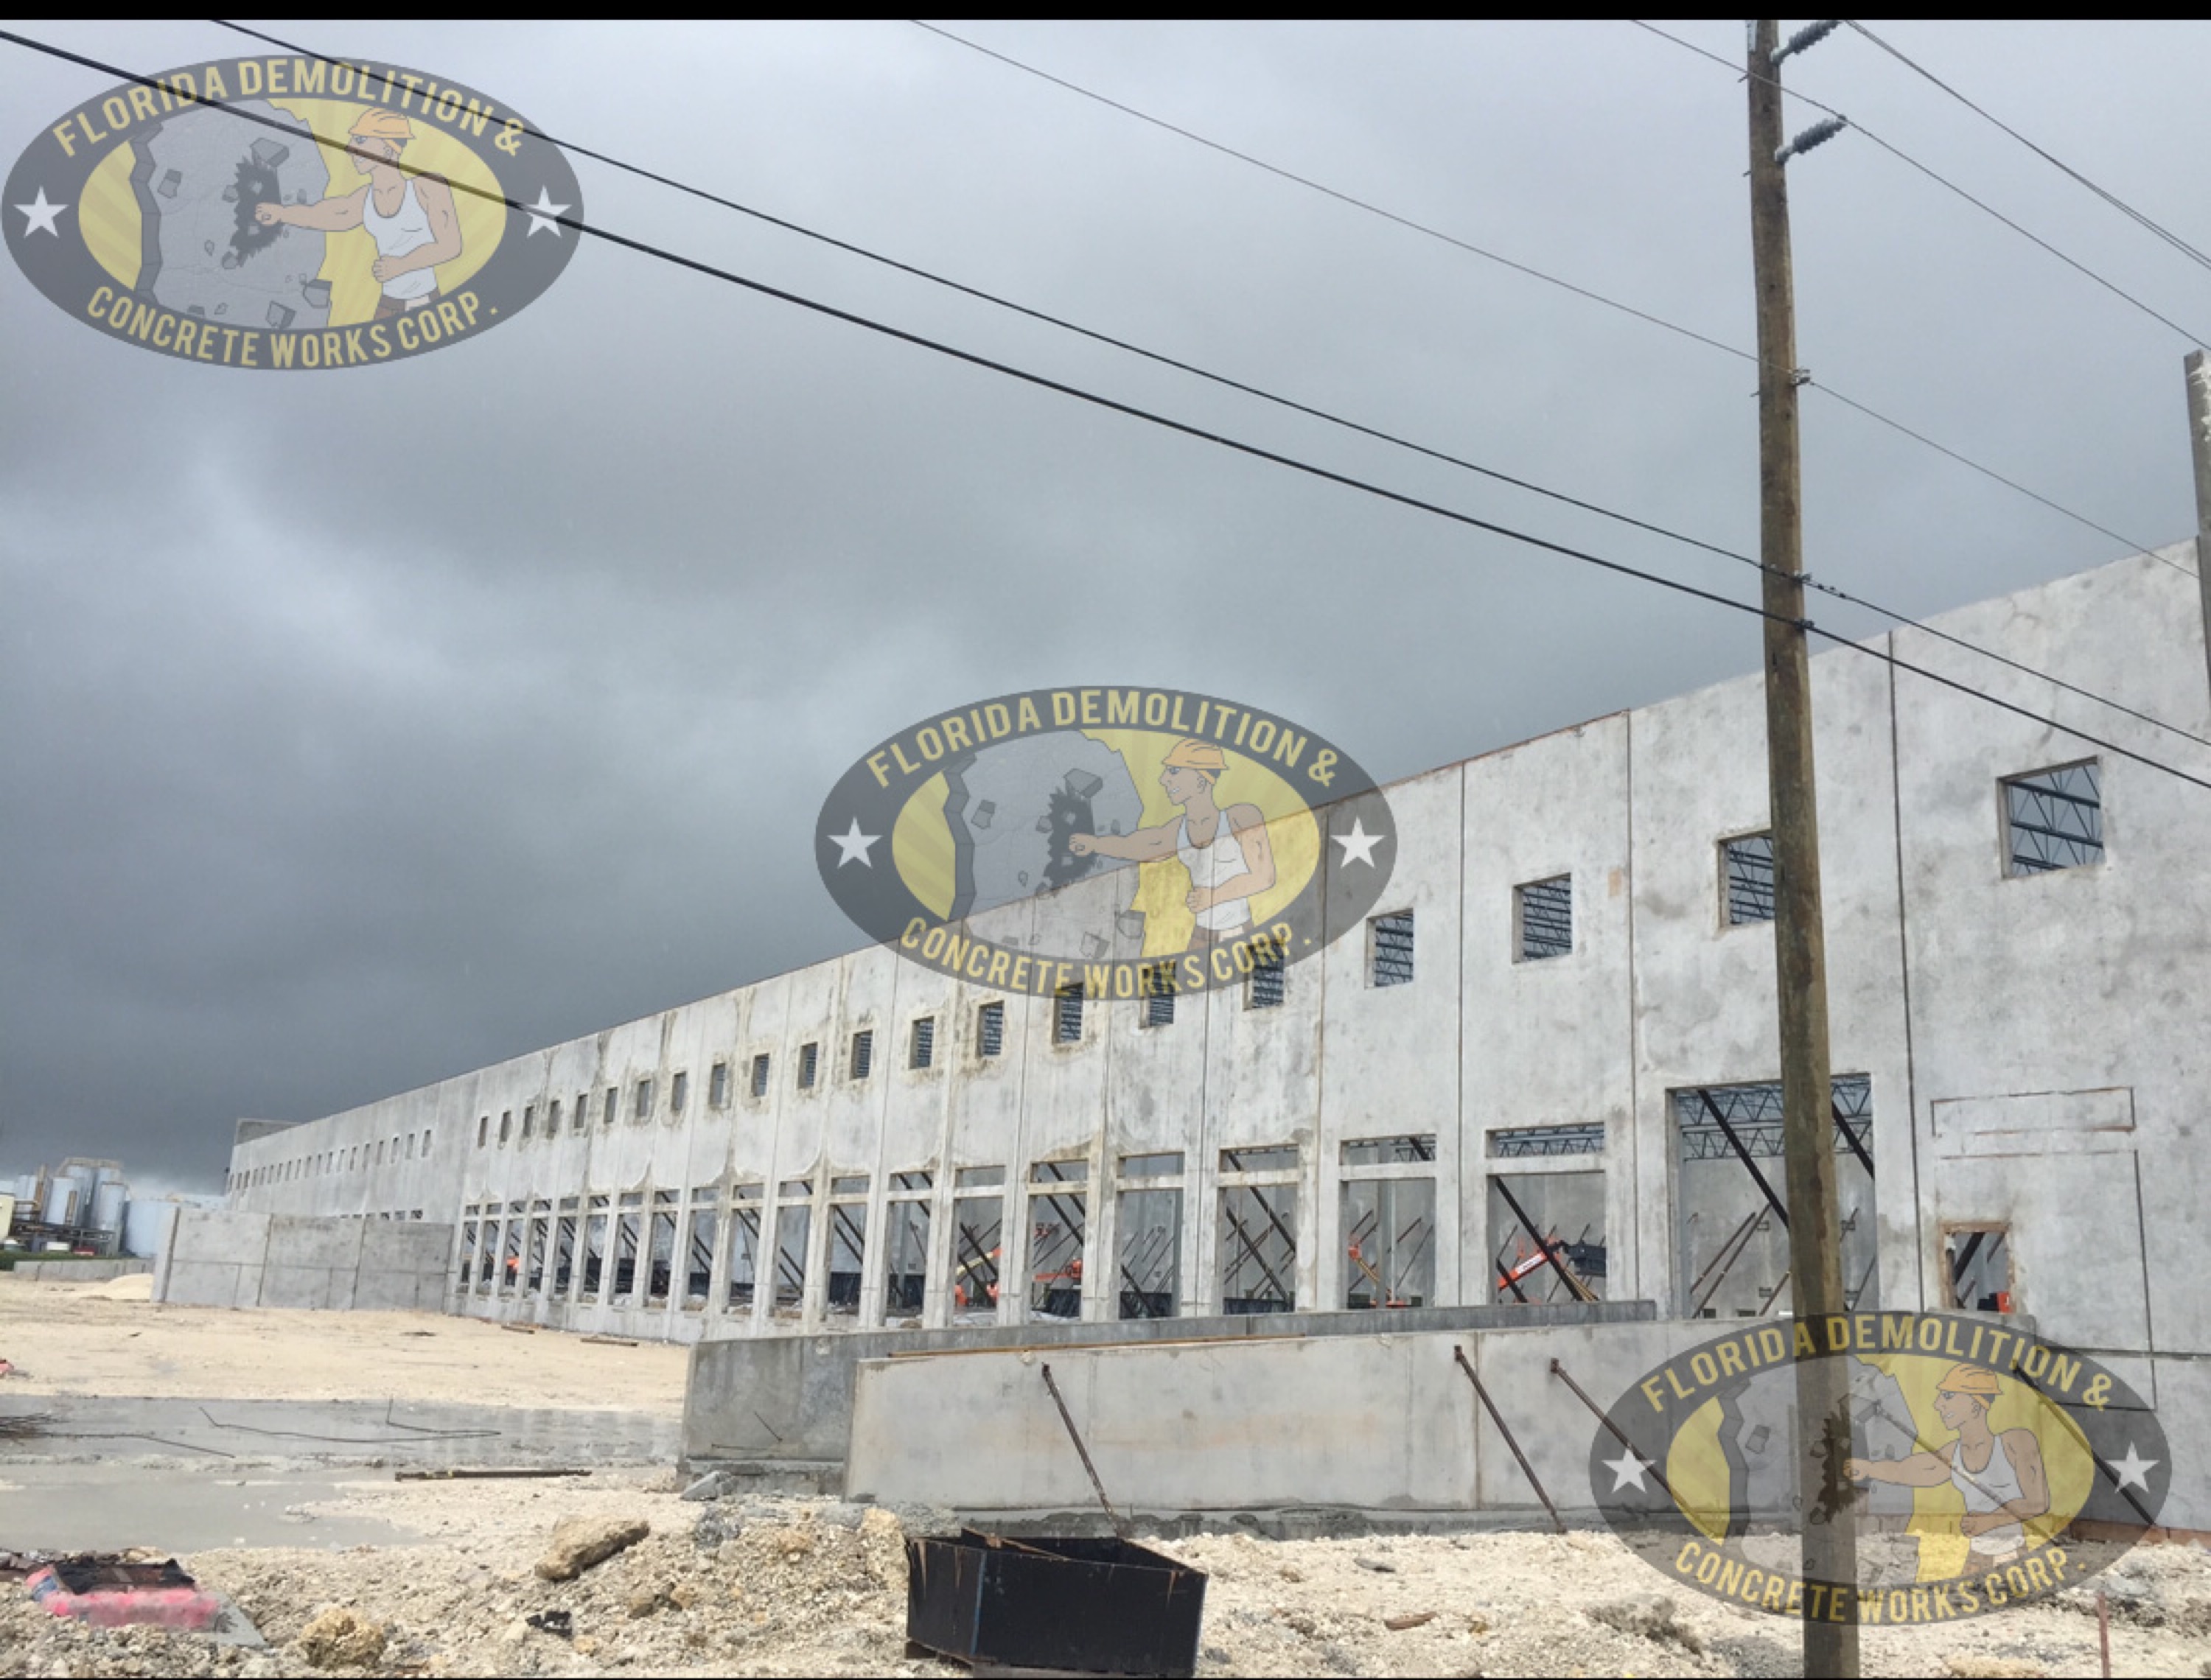 Florida Demolition & Concrete Works, Corp. Logo